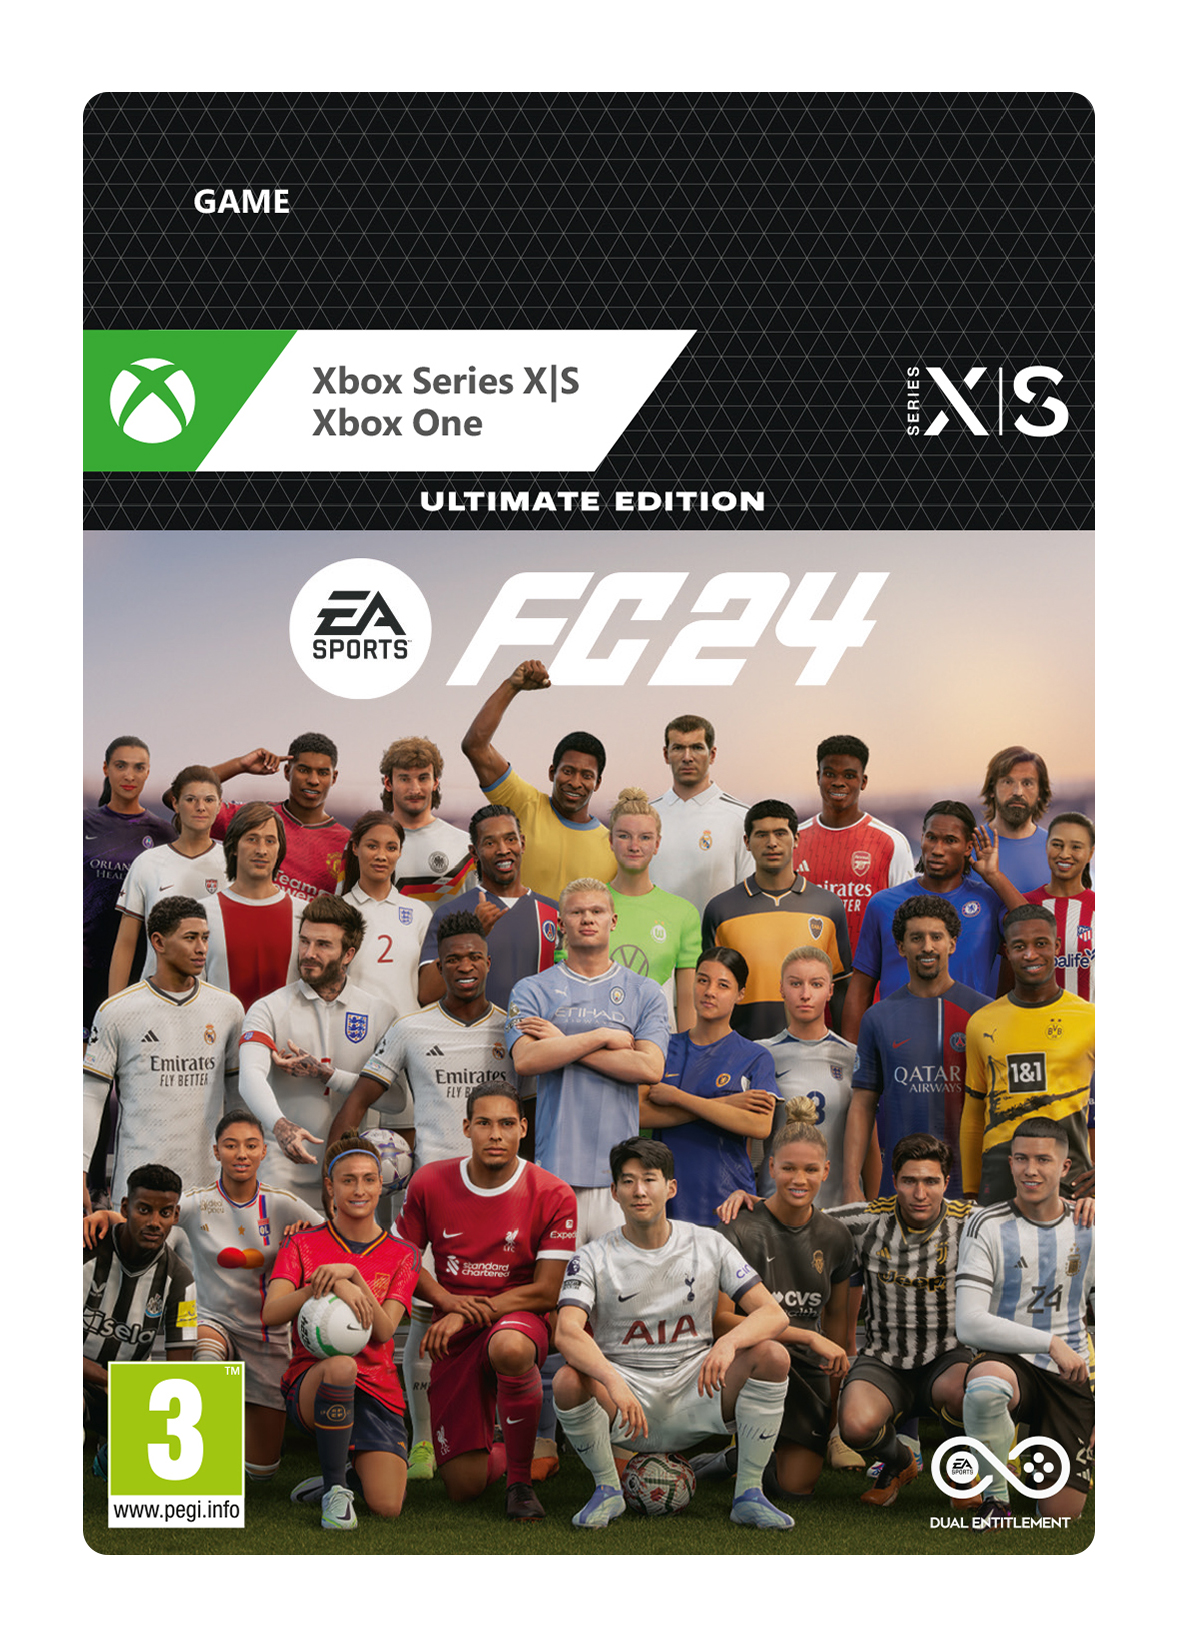 Buy EA SPORTS FC™ 24 - FC Points 5900